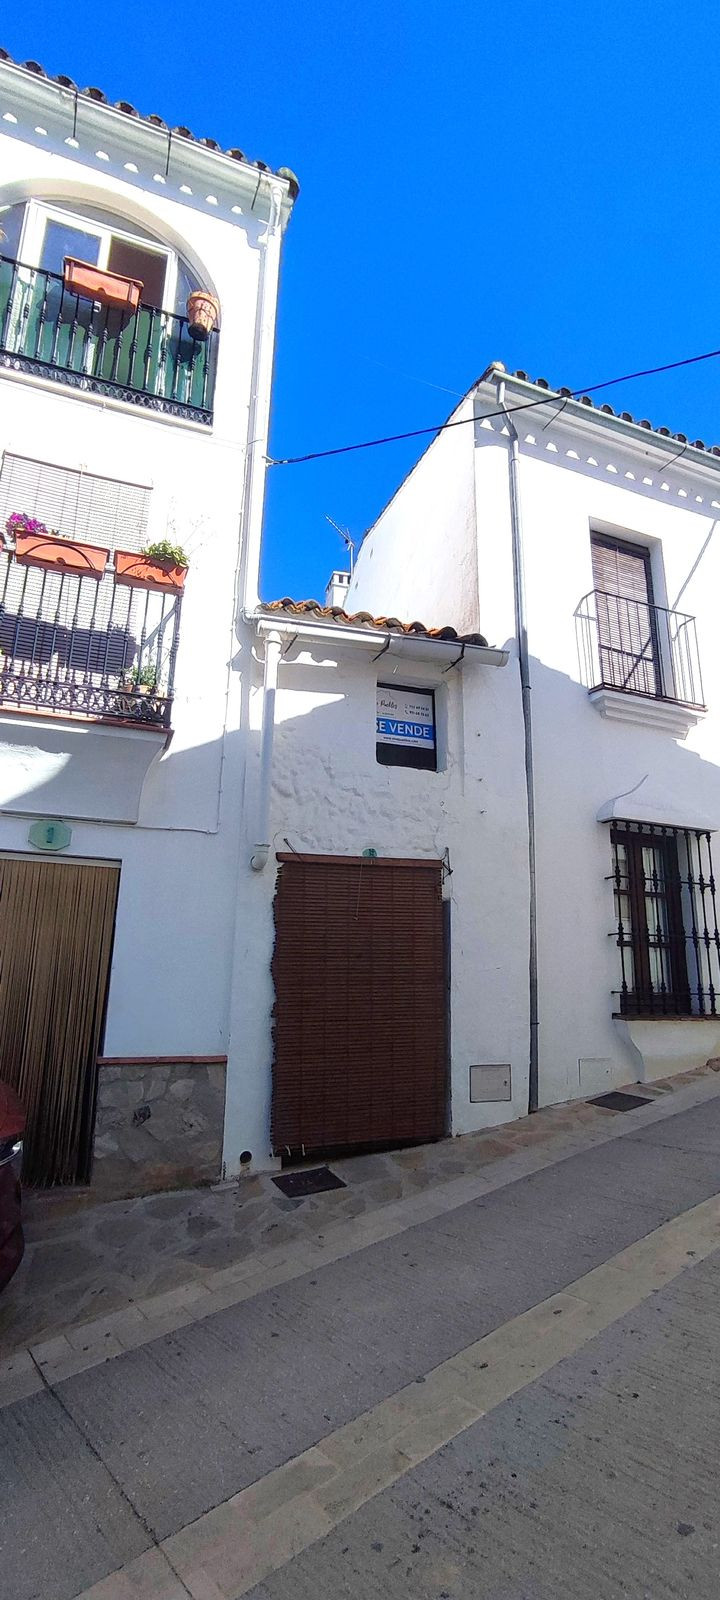 						Maison Jumelée  Mitoyenne
													en vente 
																			 à Gaucín
					